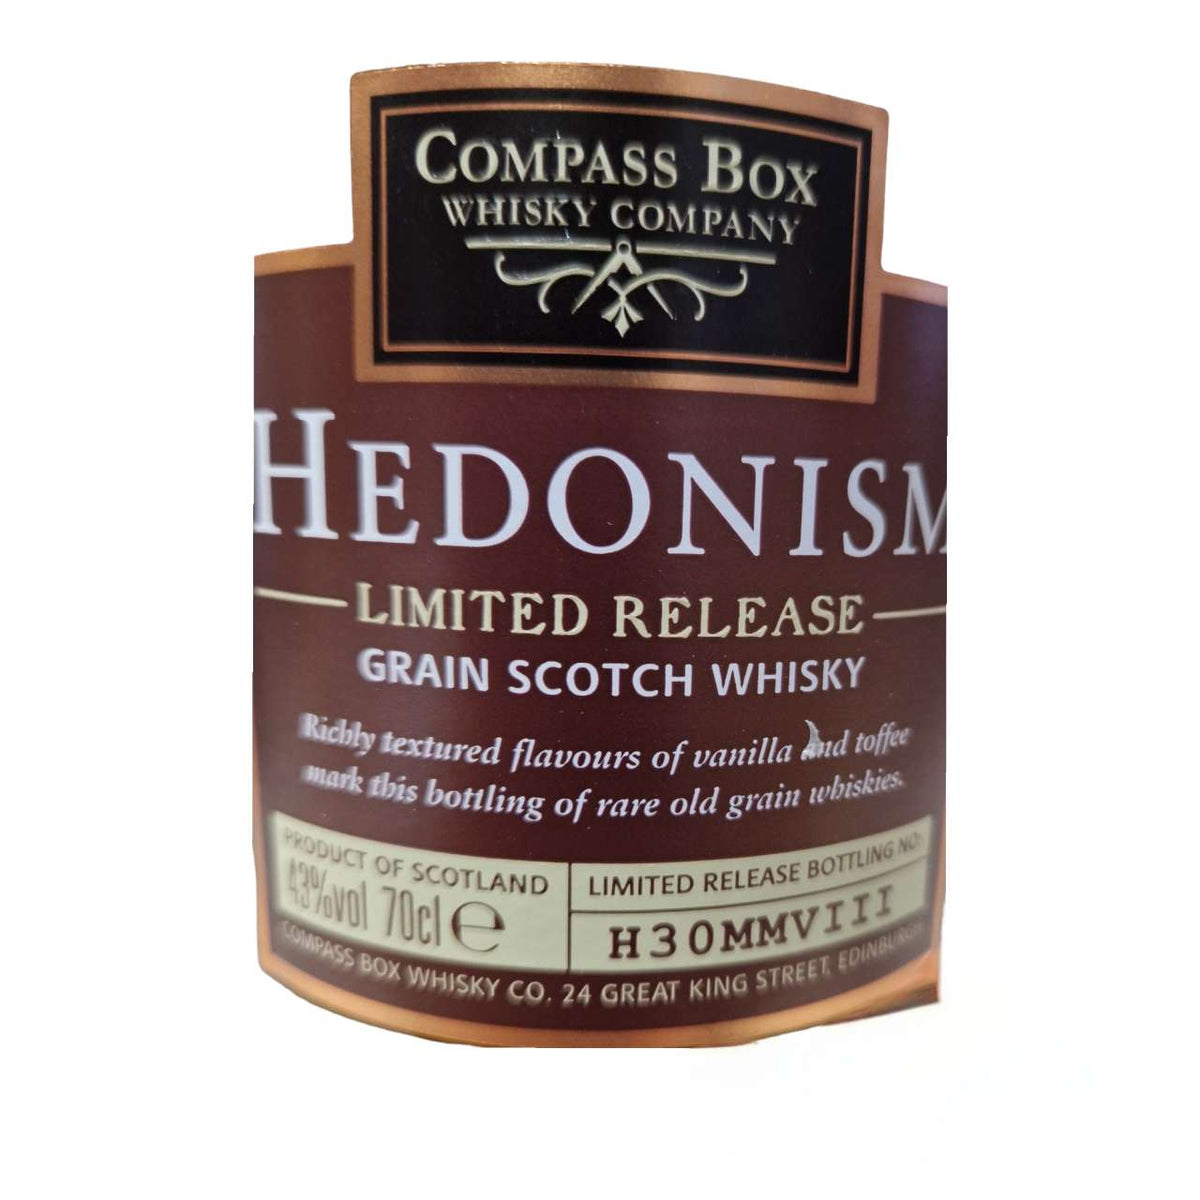 Hedonism Compass Box H30MMVIII 0,7 L